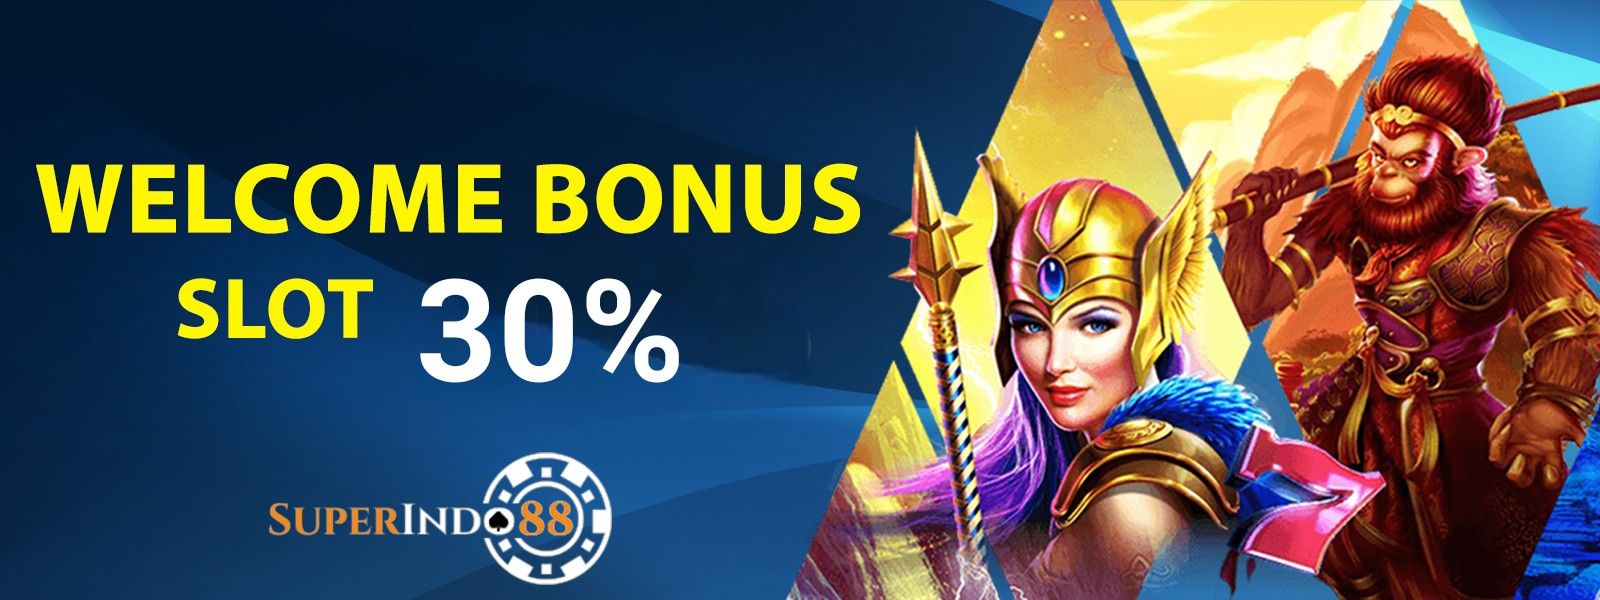 Welcome bonus slot 30%